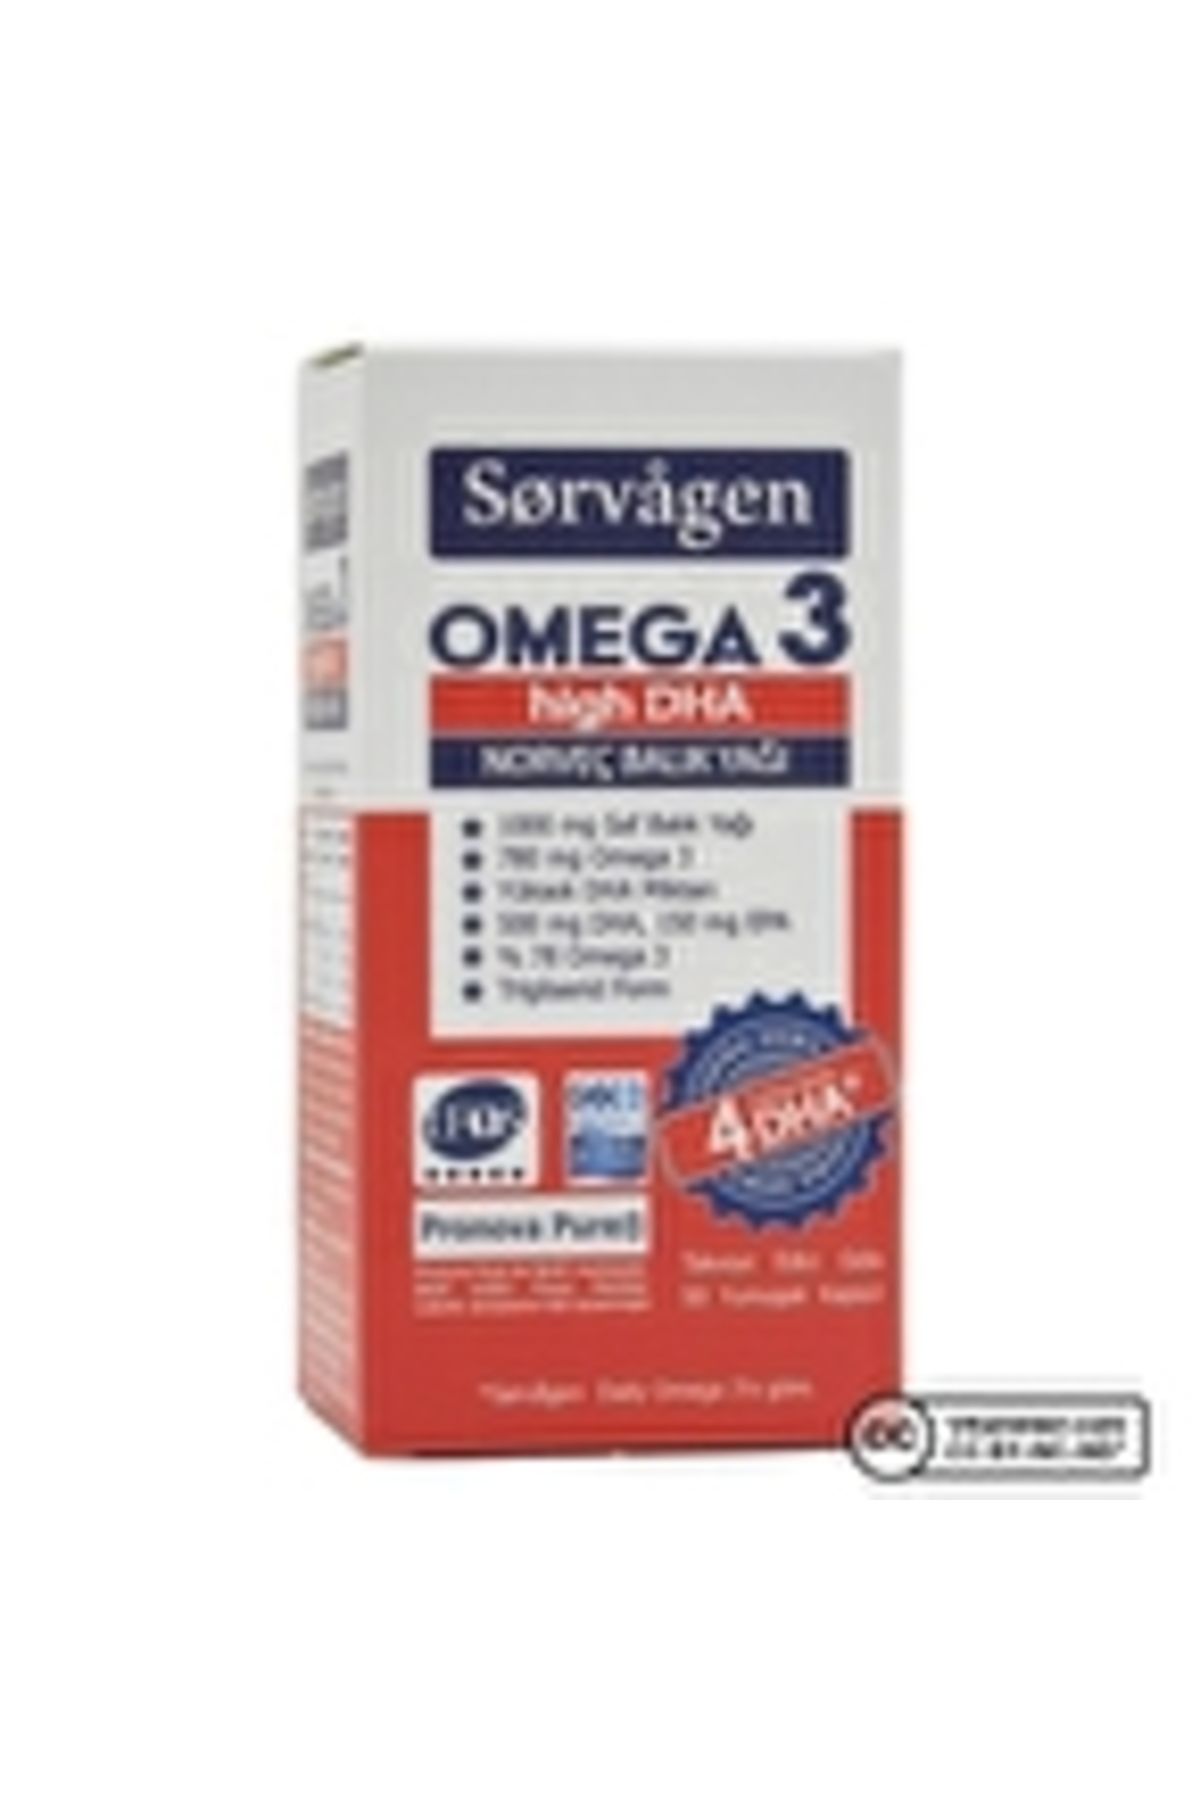 Sorvagen Omega 3 High DHA 1000 Mg Balık Yağı 50 Kapsül ( 1 ADET )